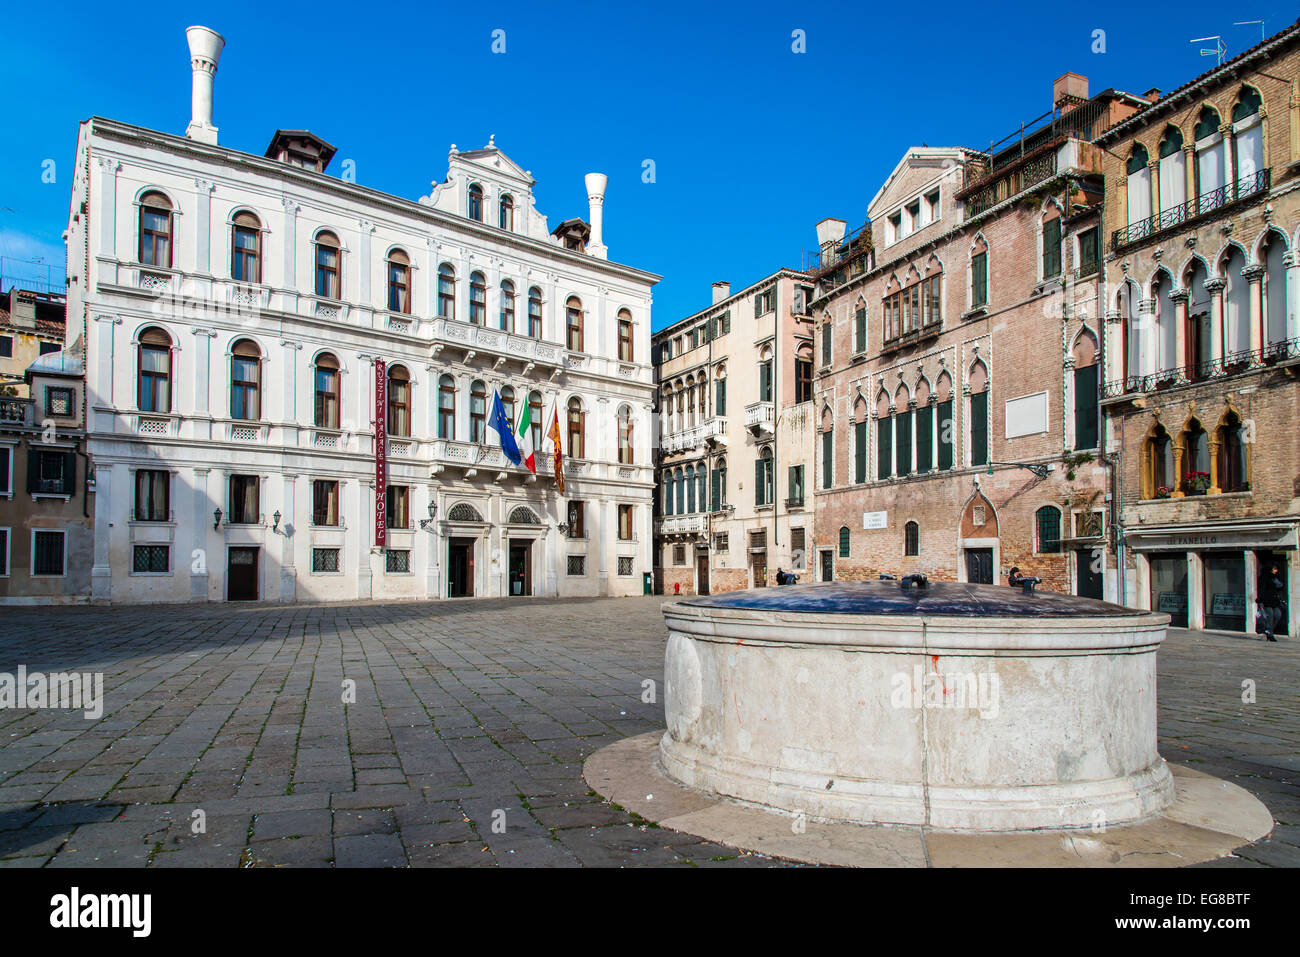 Palazzo priuli ruzzini hi-res stock photography and images - Alamy